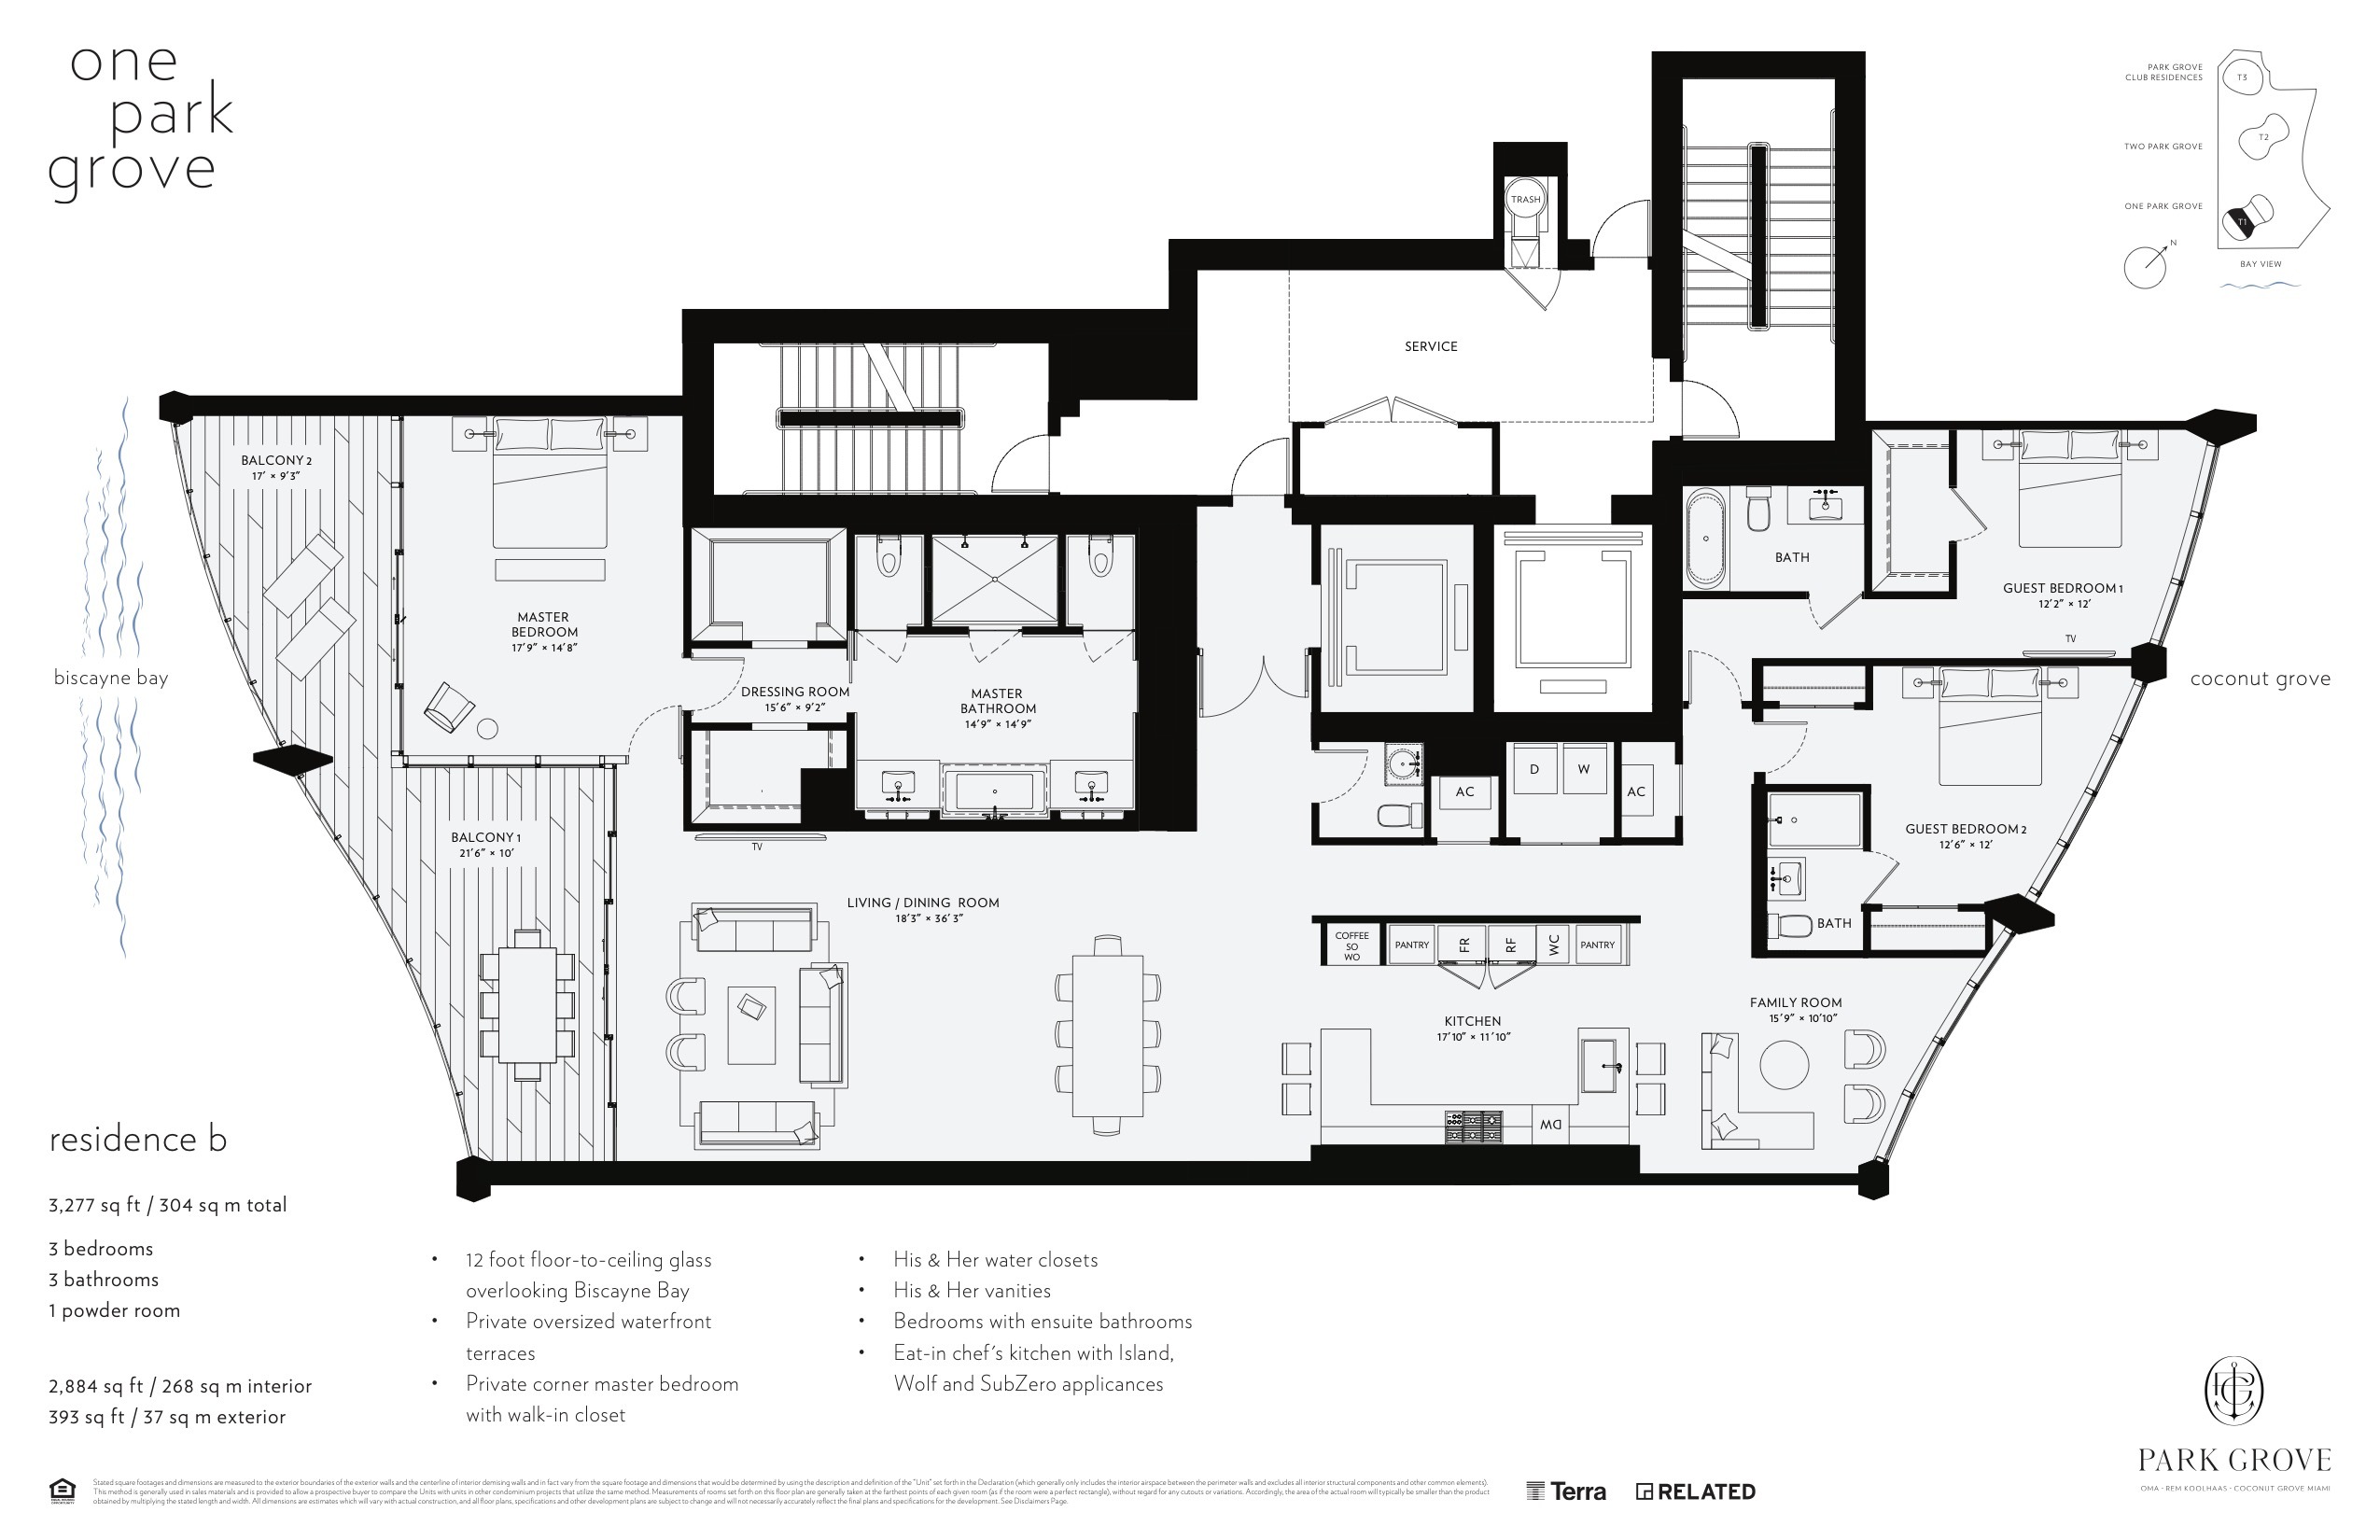 Floor Plan for Park Grove Floorplans, One Park Grove Residence B